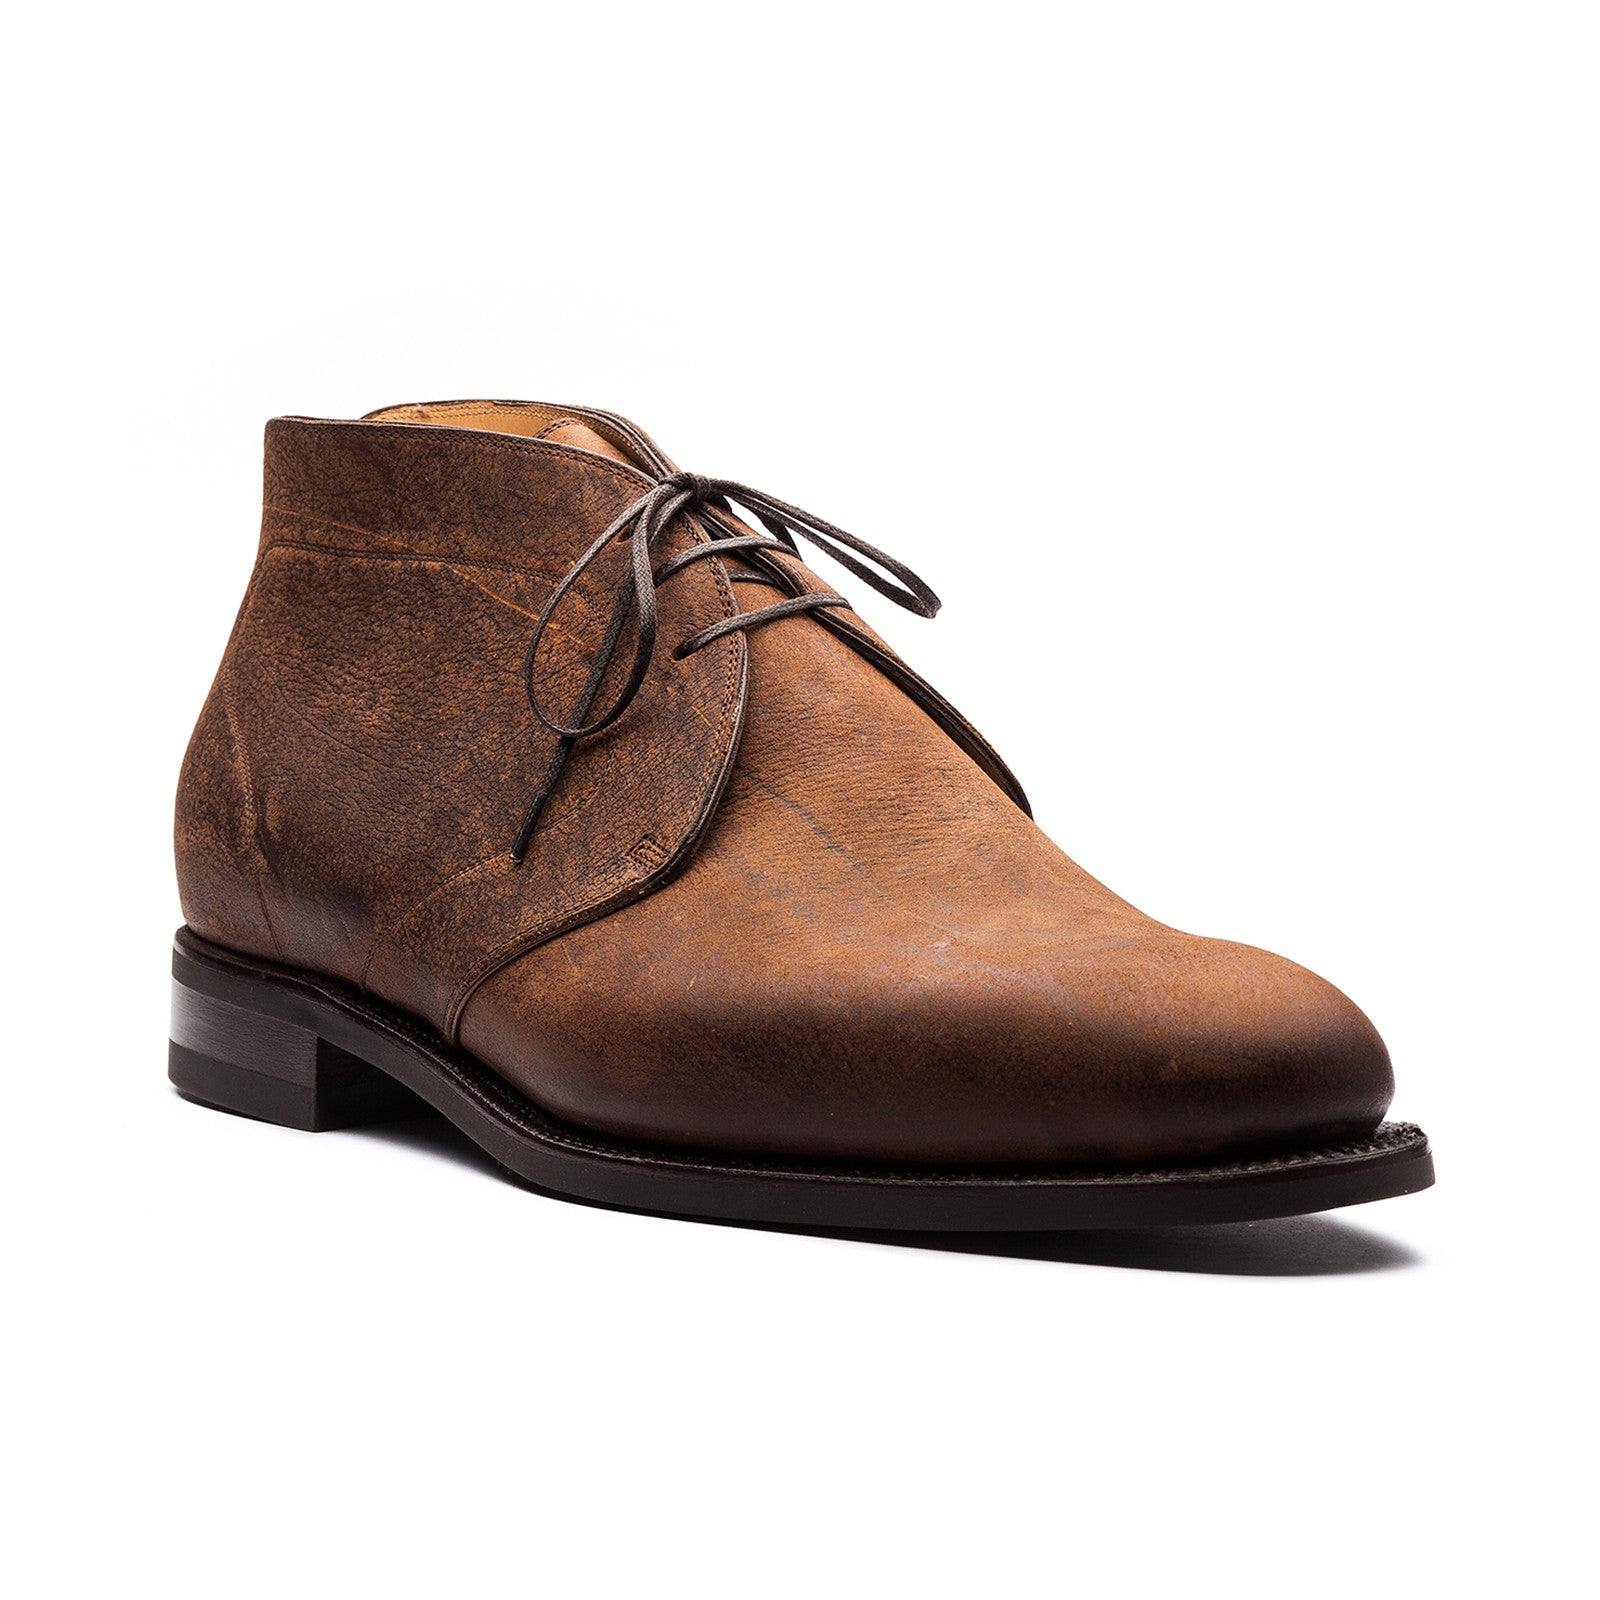 Stefano Bemer Style 7000 Chukka Boot - Snuff Antelope – Mehra